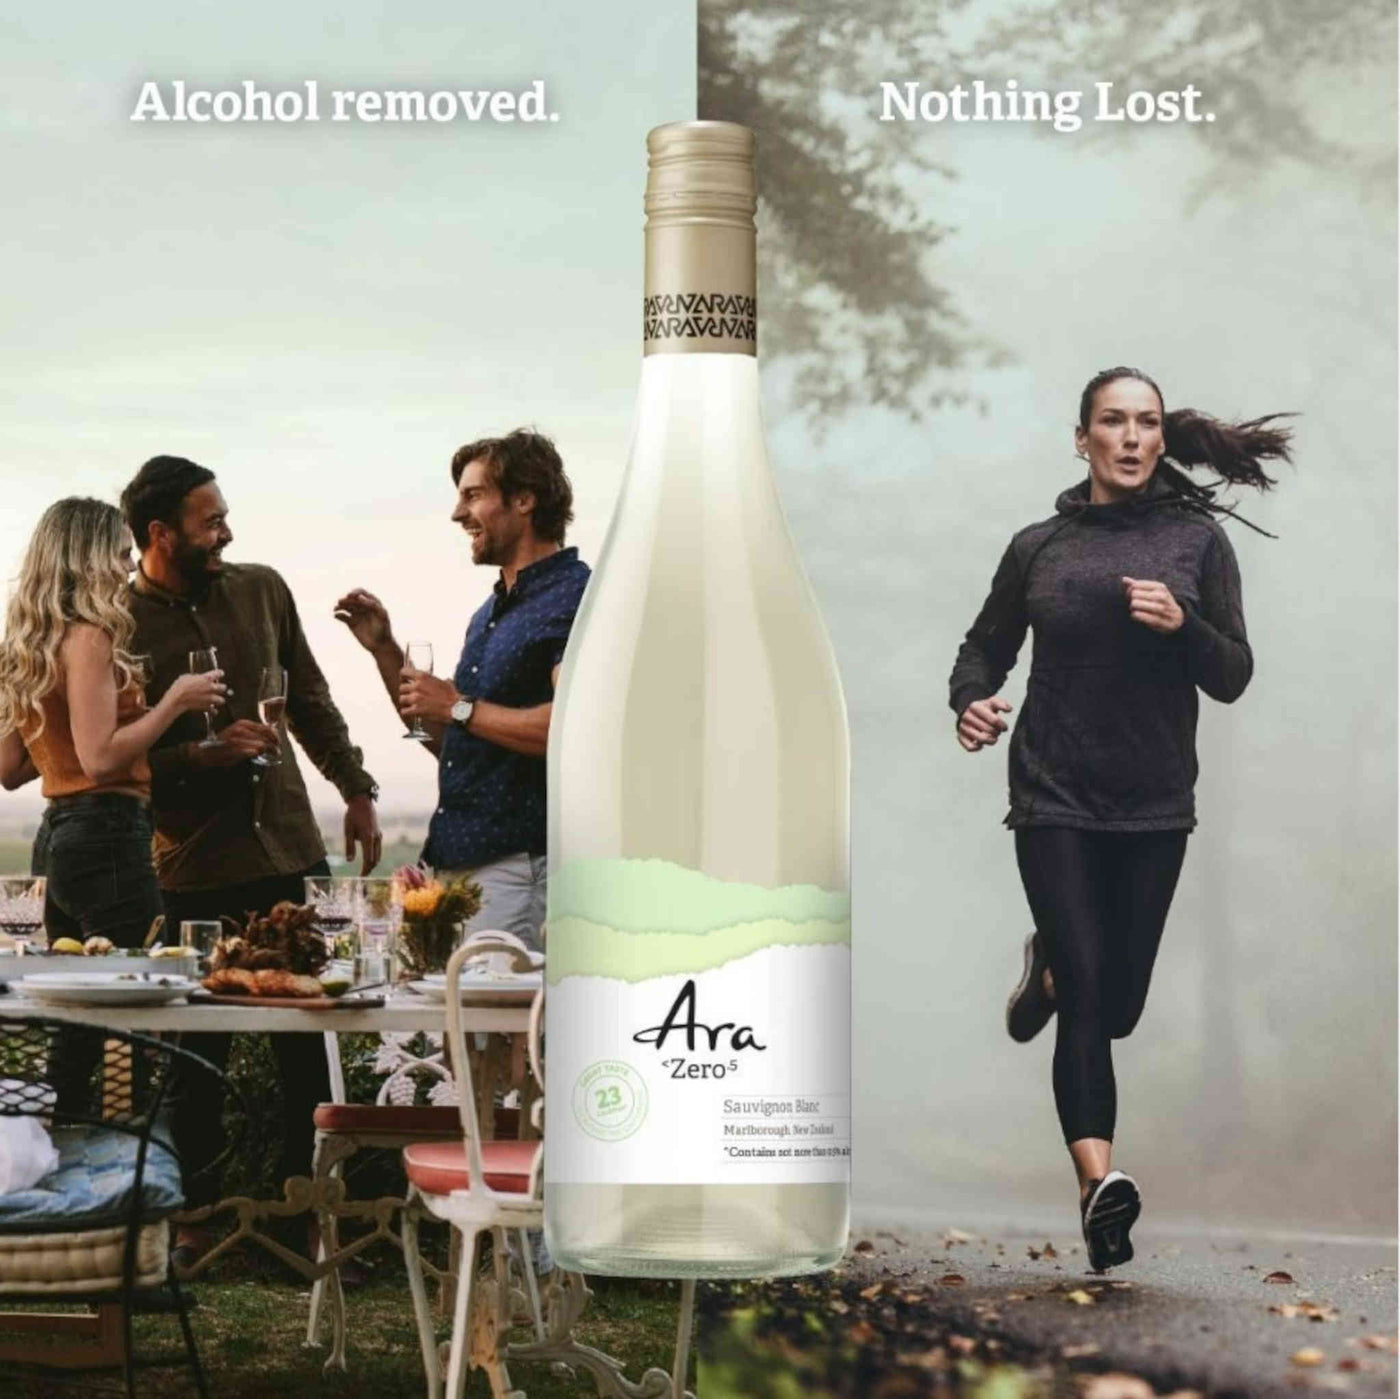 Ara Zero NZ Marlborough Sauvignon Blanc Alcohol Free Wine, lifestyle photo